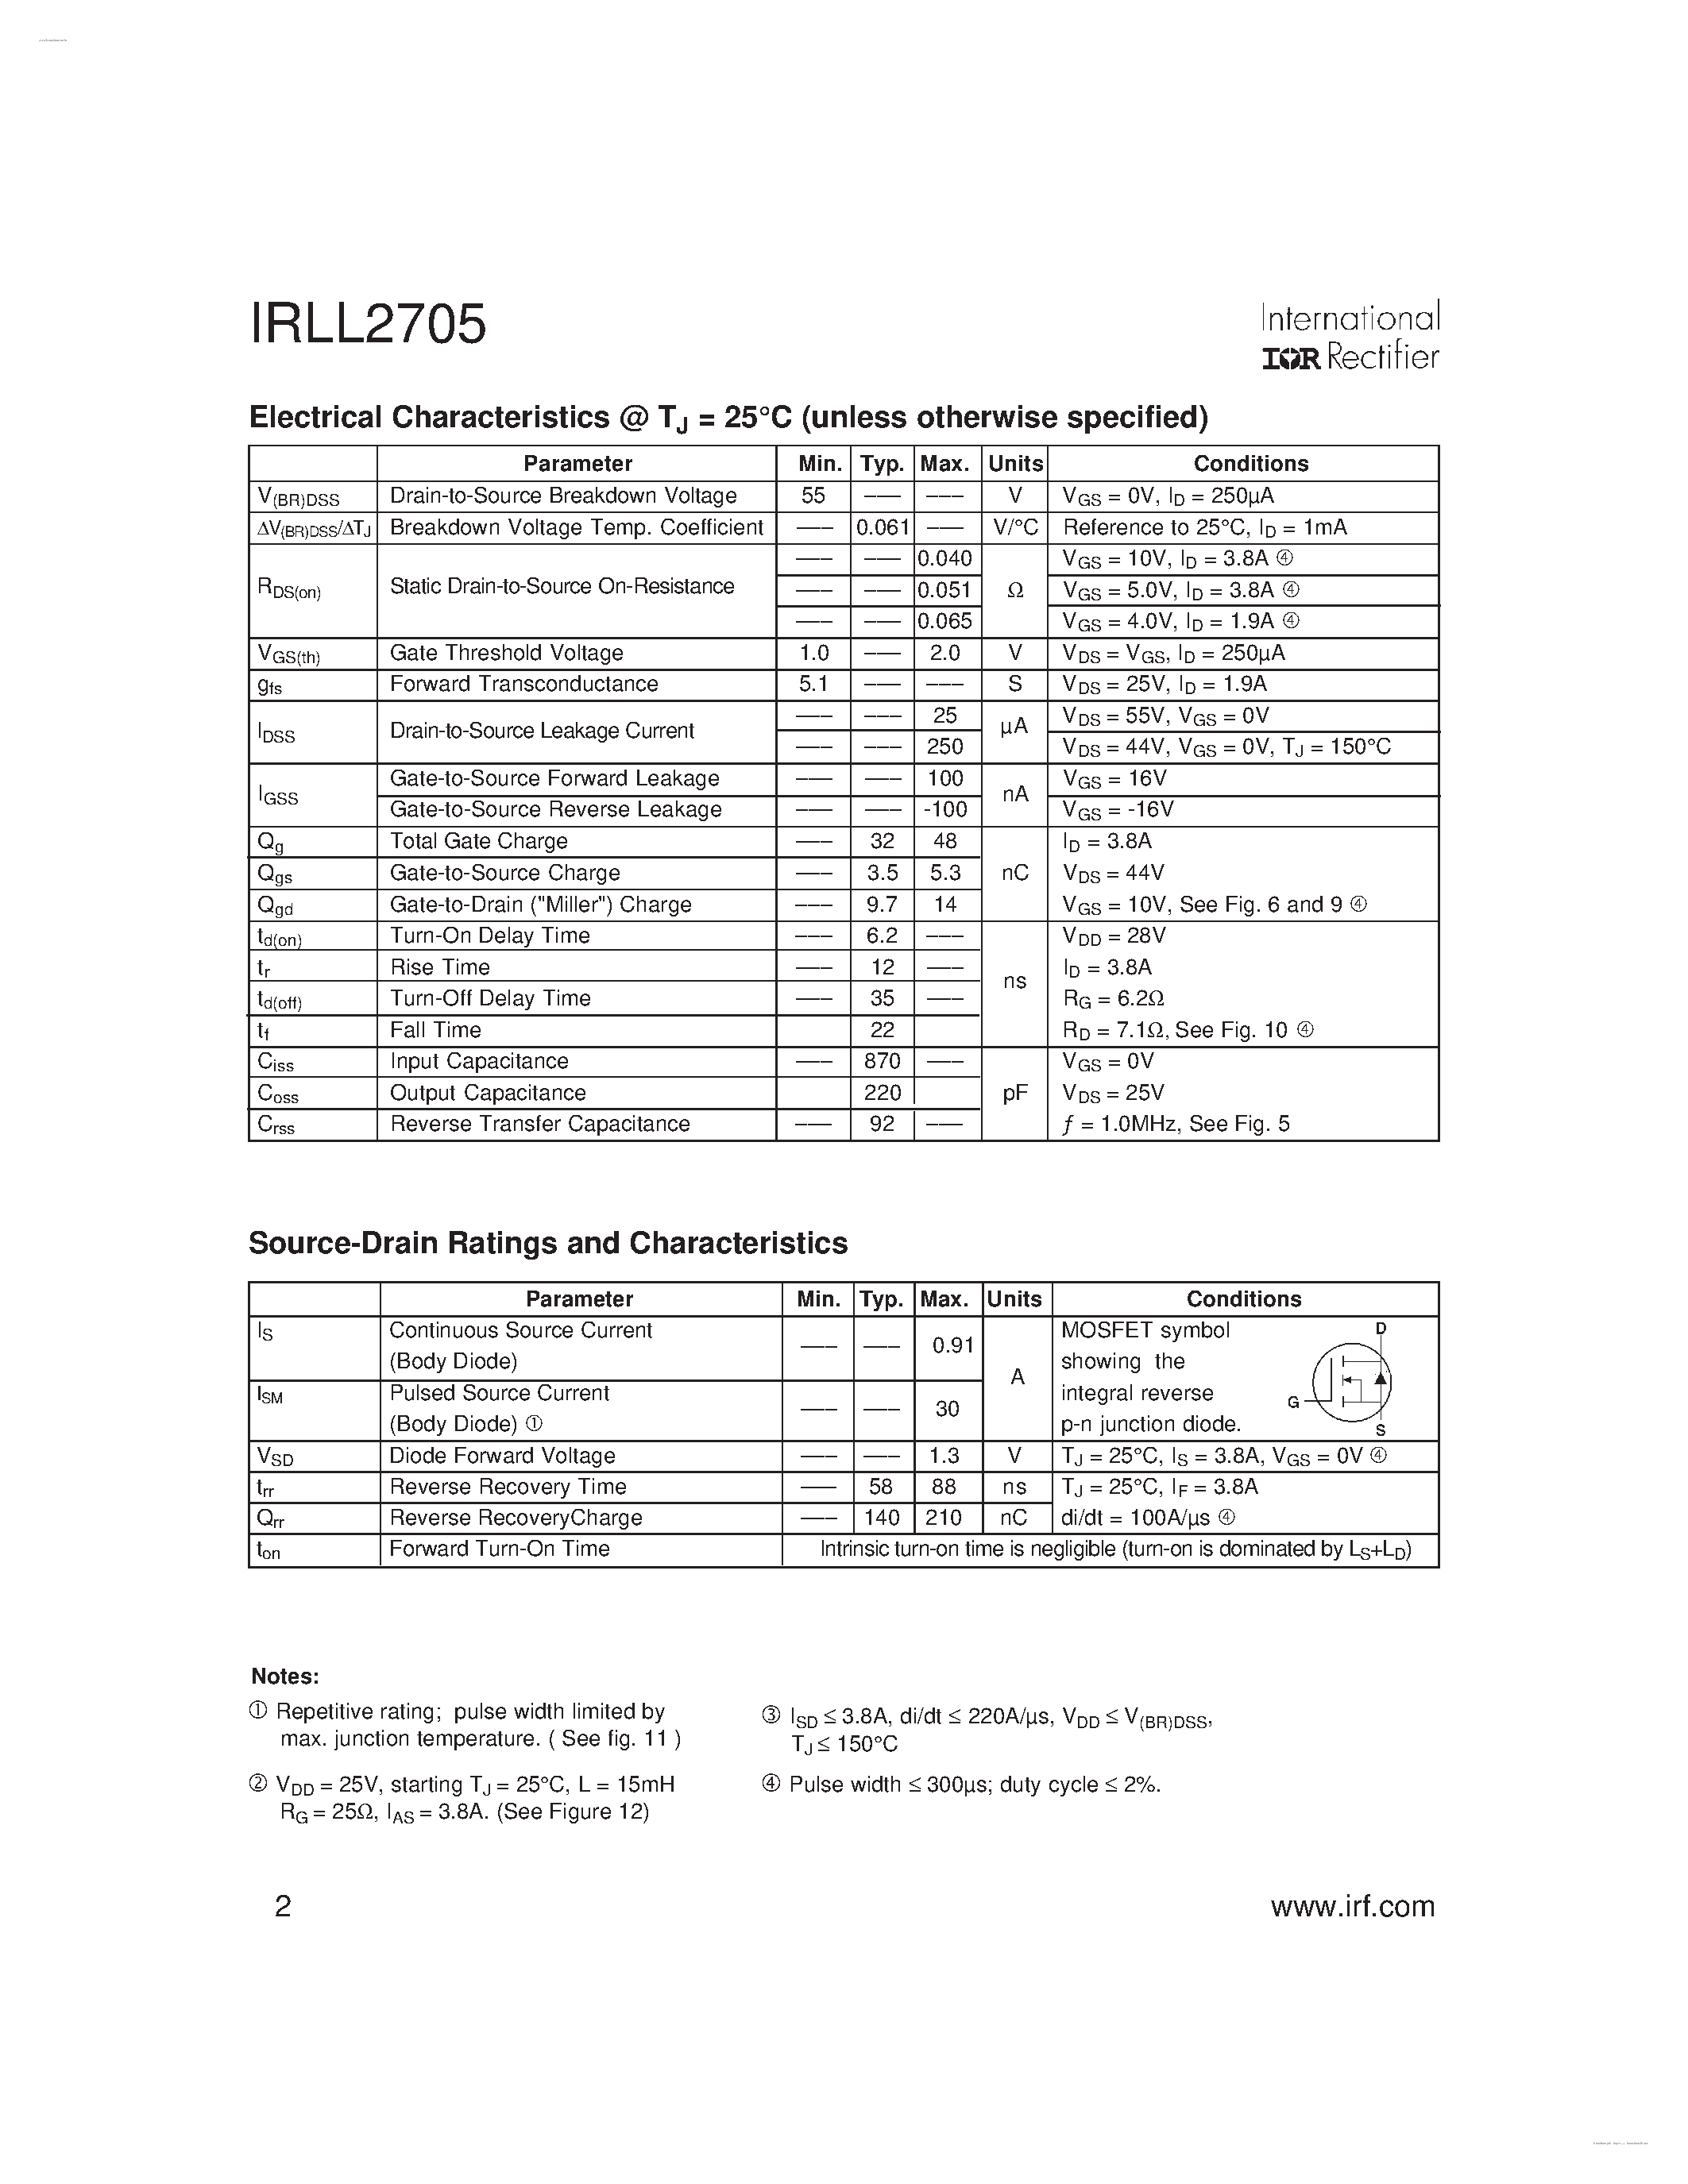 Datasheet LL2705 - Search -----> IRLL2705 page 2